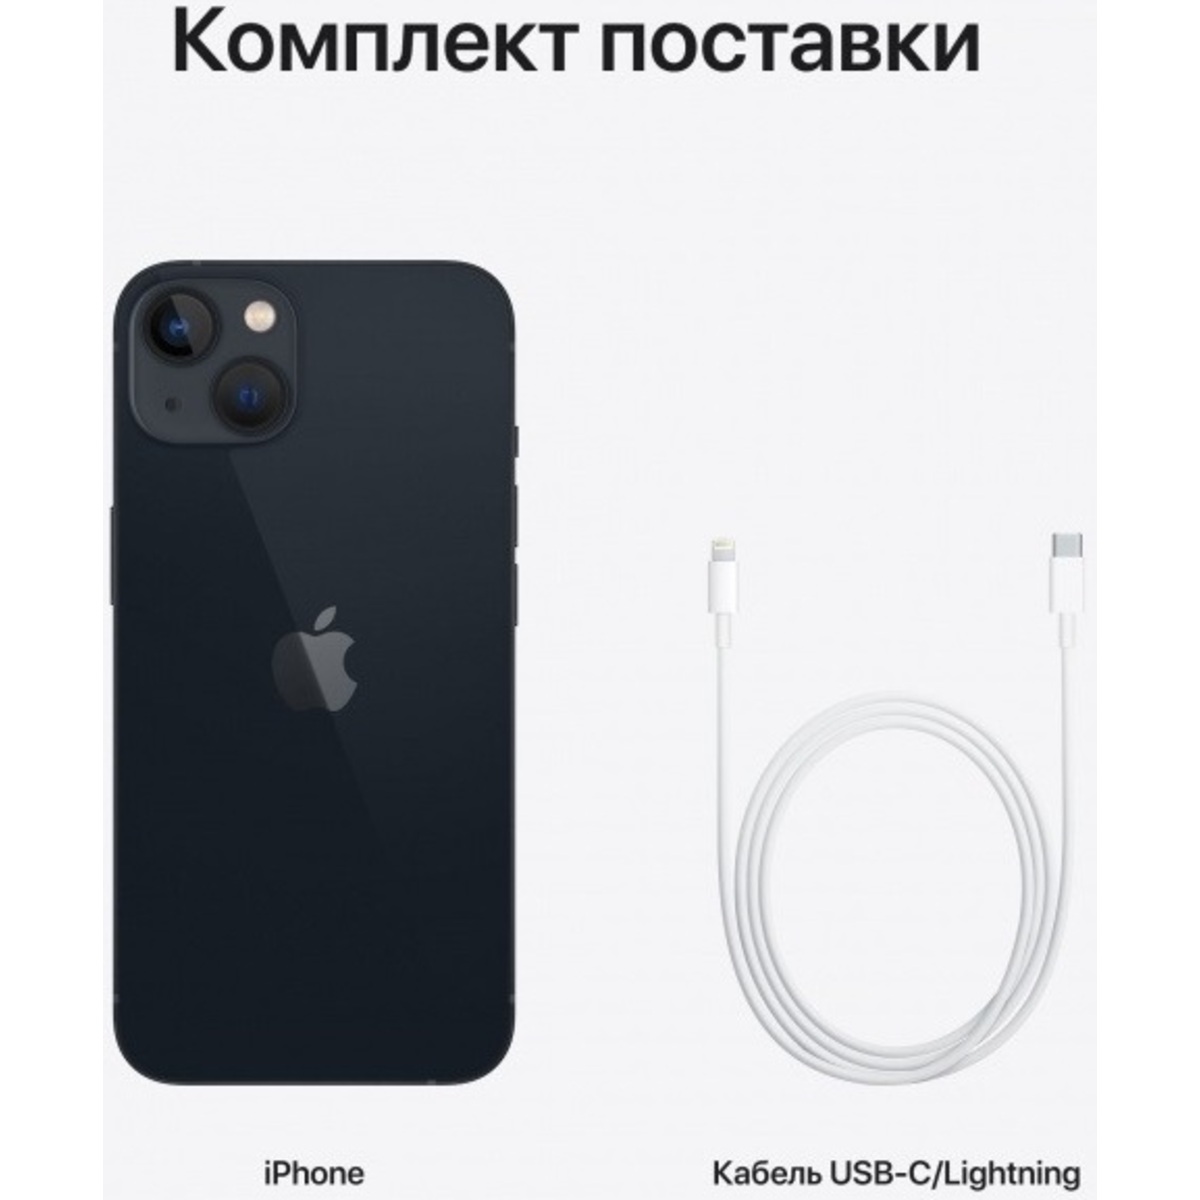 Смартфон Apple iPhone 13 256Gb, темная ночь